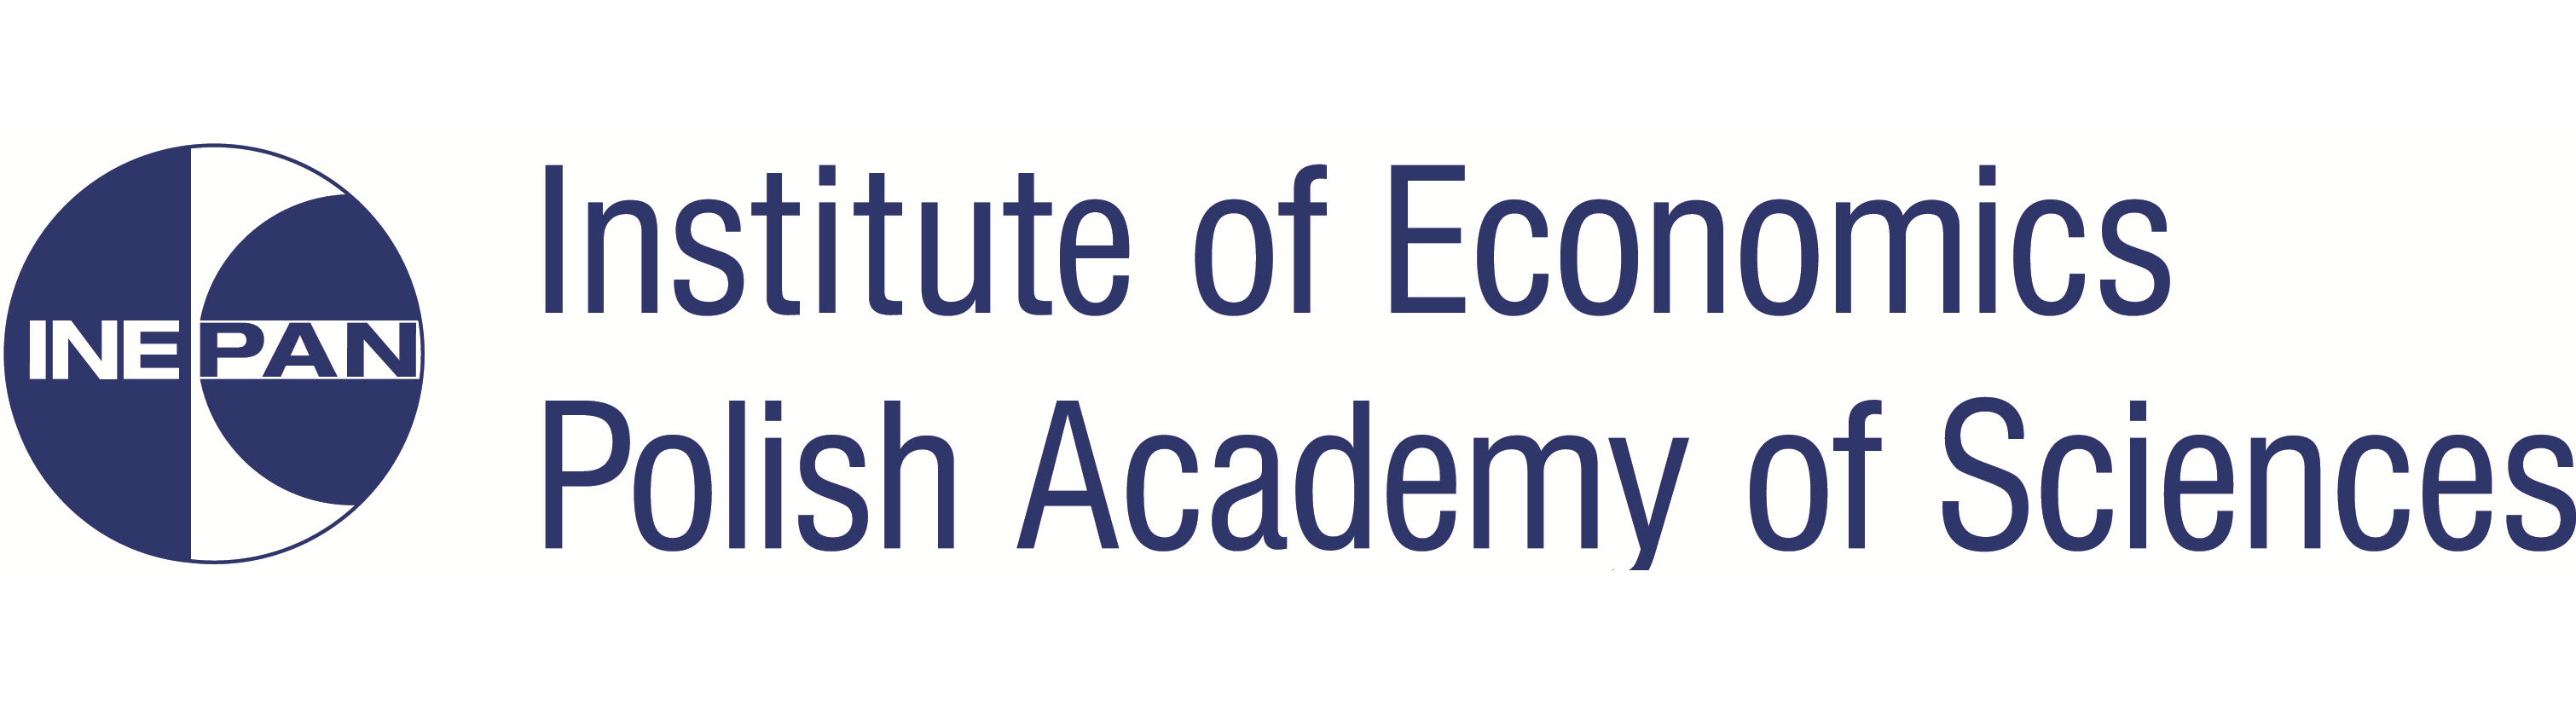 Institute of Economics - Polish Academy of Science